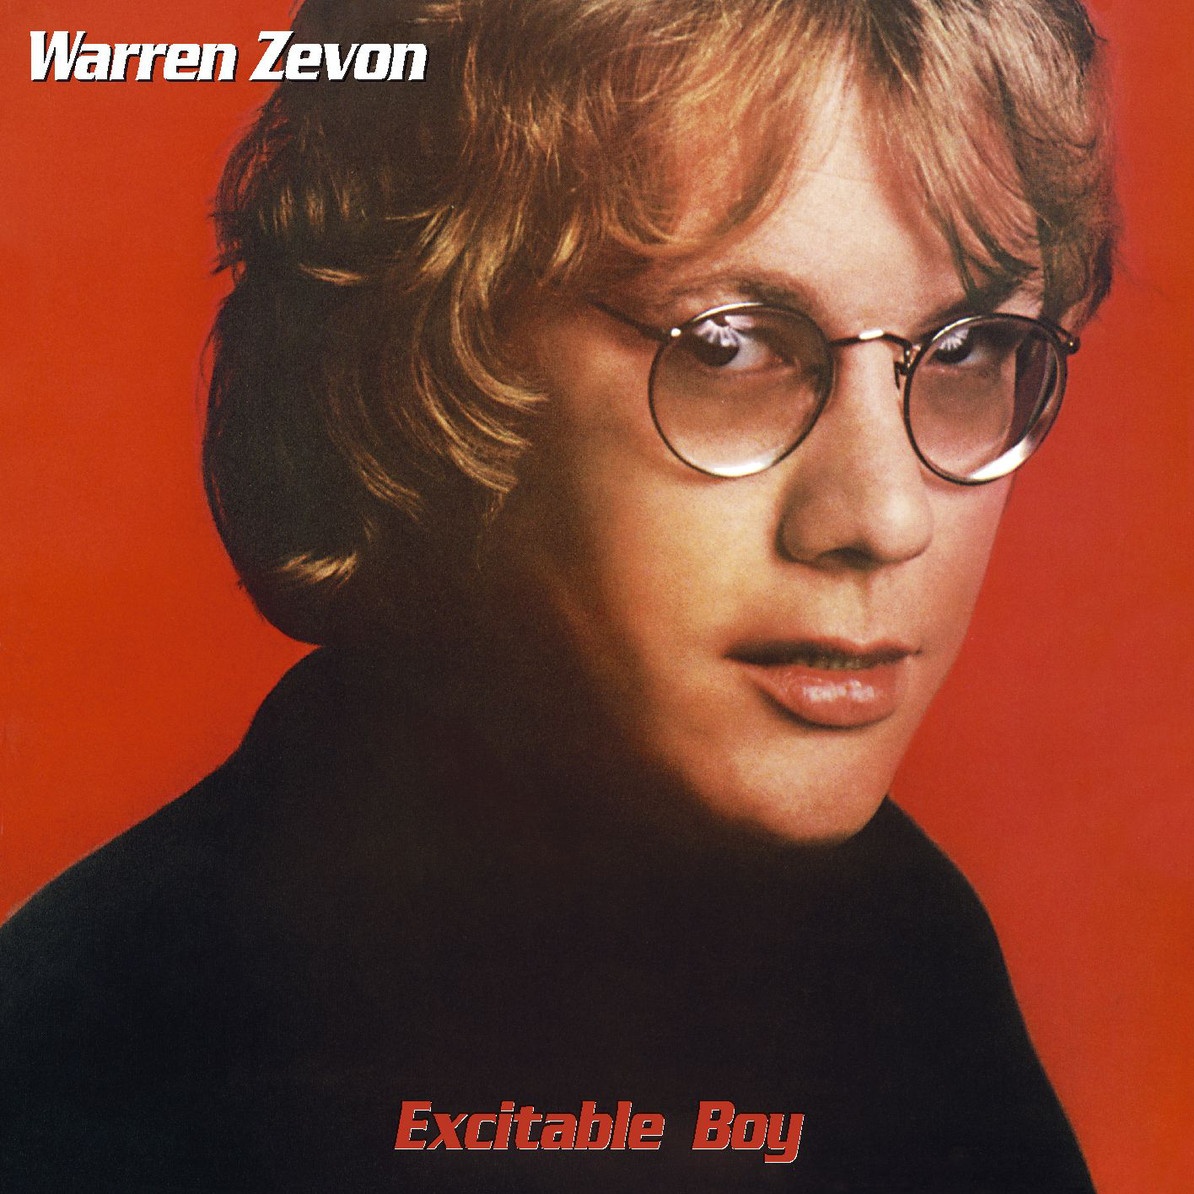 Excitable Boy (2007 Remastered LP Version)